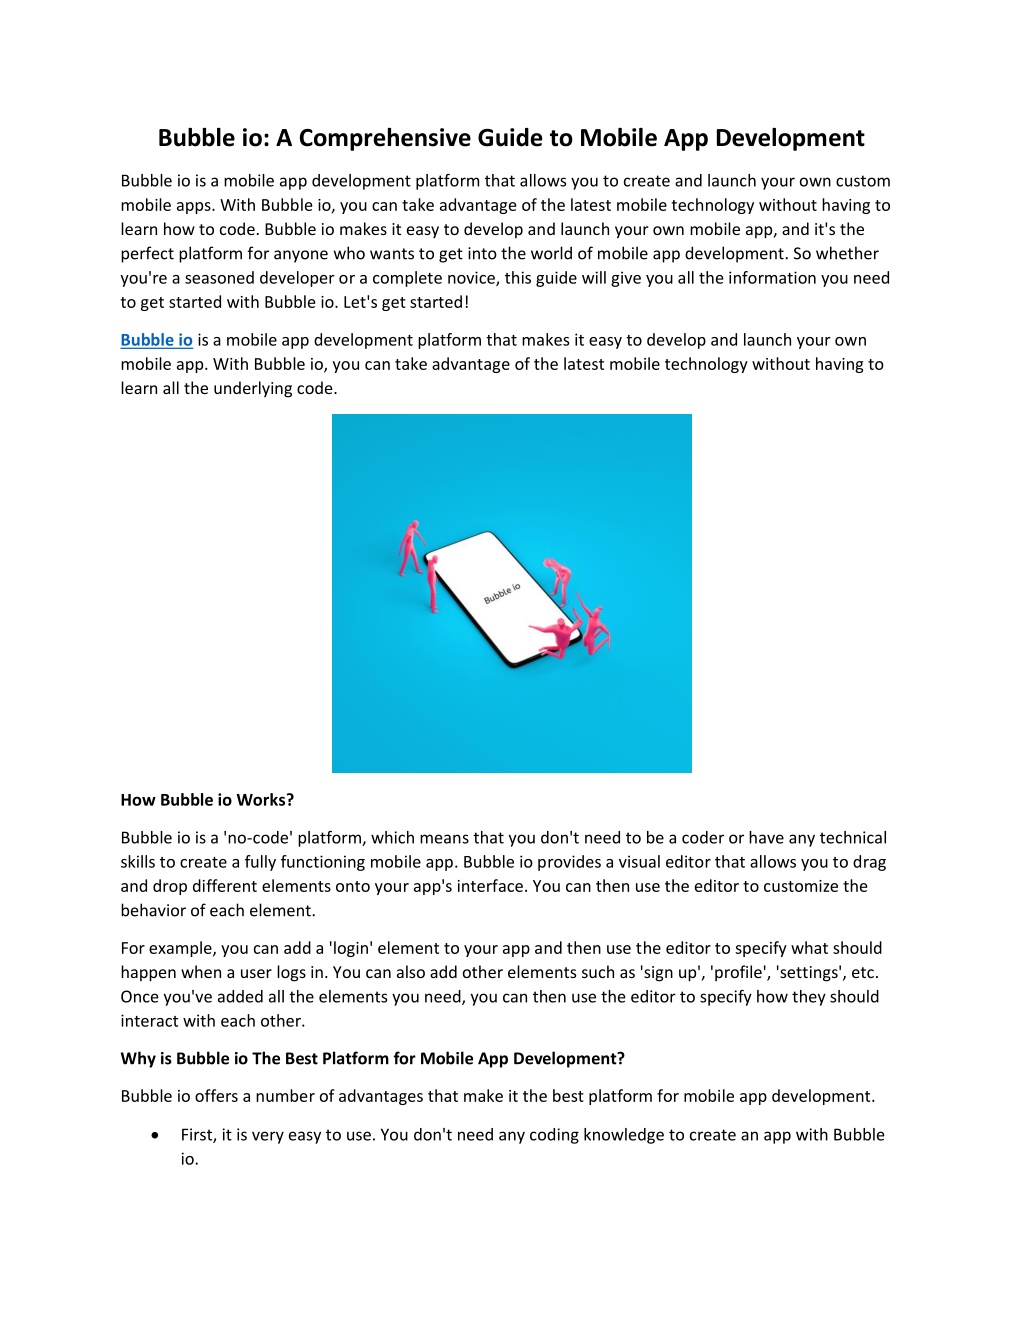 PPT Bubble IO_A Comprehensive Guide to Mobile App Development